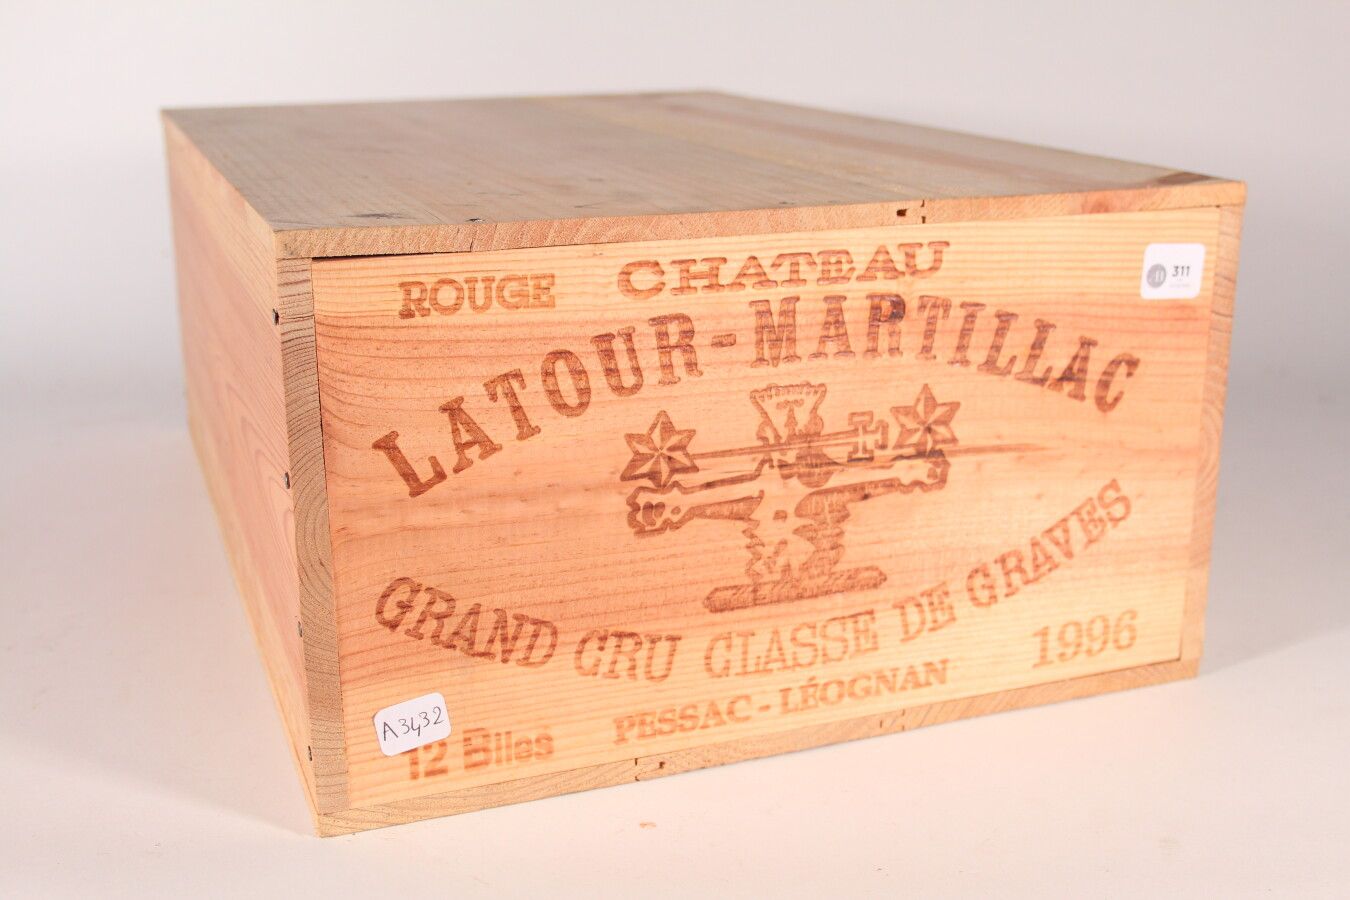 Null 1996 - Château Latour Martillac

Pessac-Léognan - 12 bottiglie